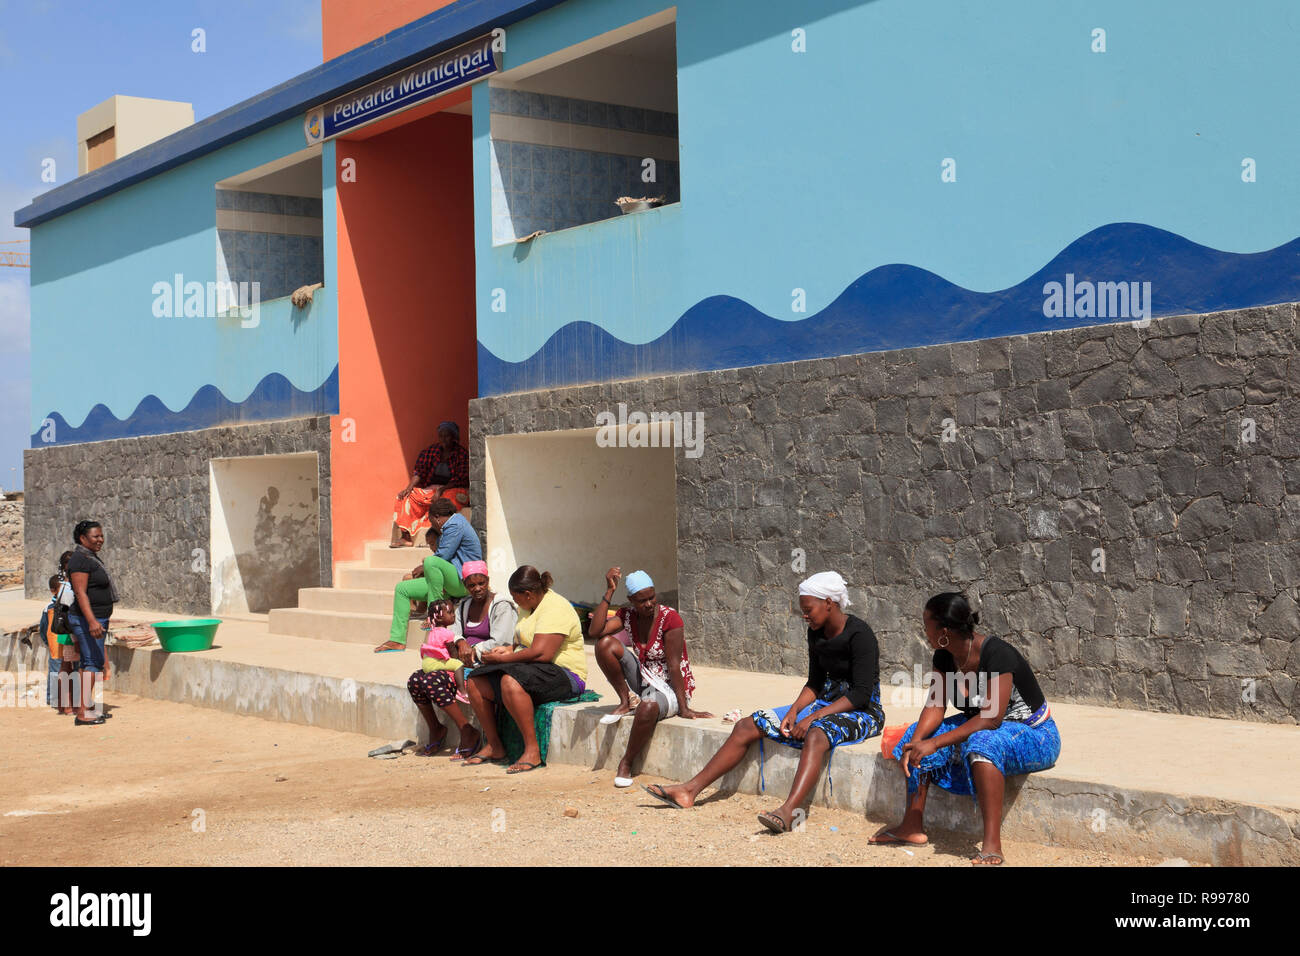 Port scene with local women sitting outside the municipal fish market. Sal Rei, Boa Vista, Cape Verde Islands, Africa Stock Photo